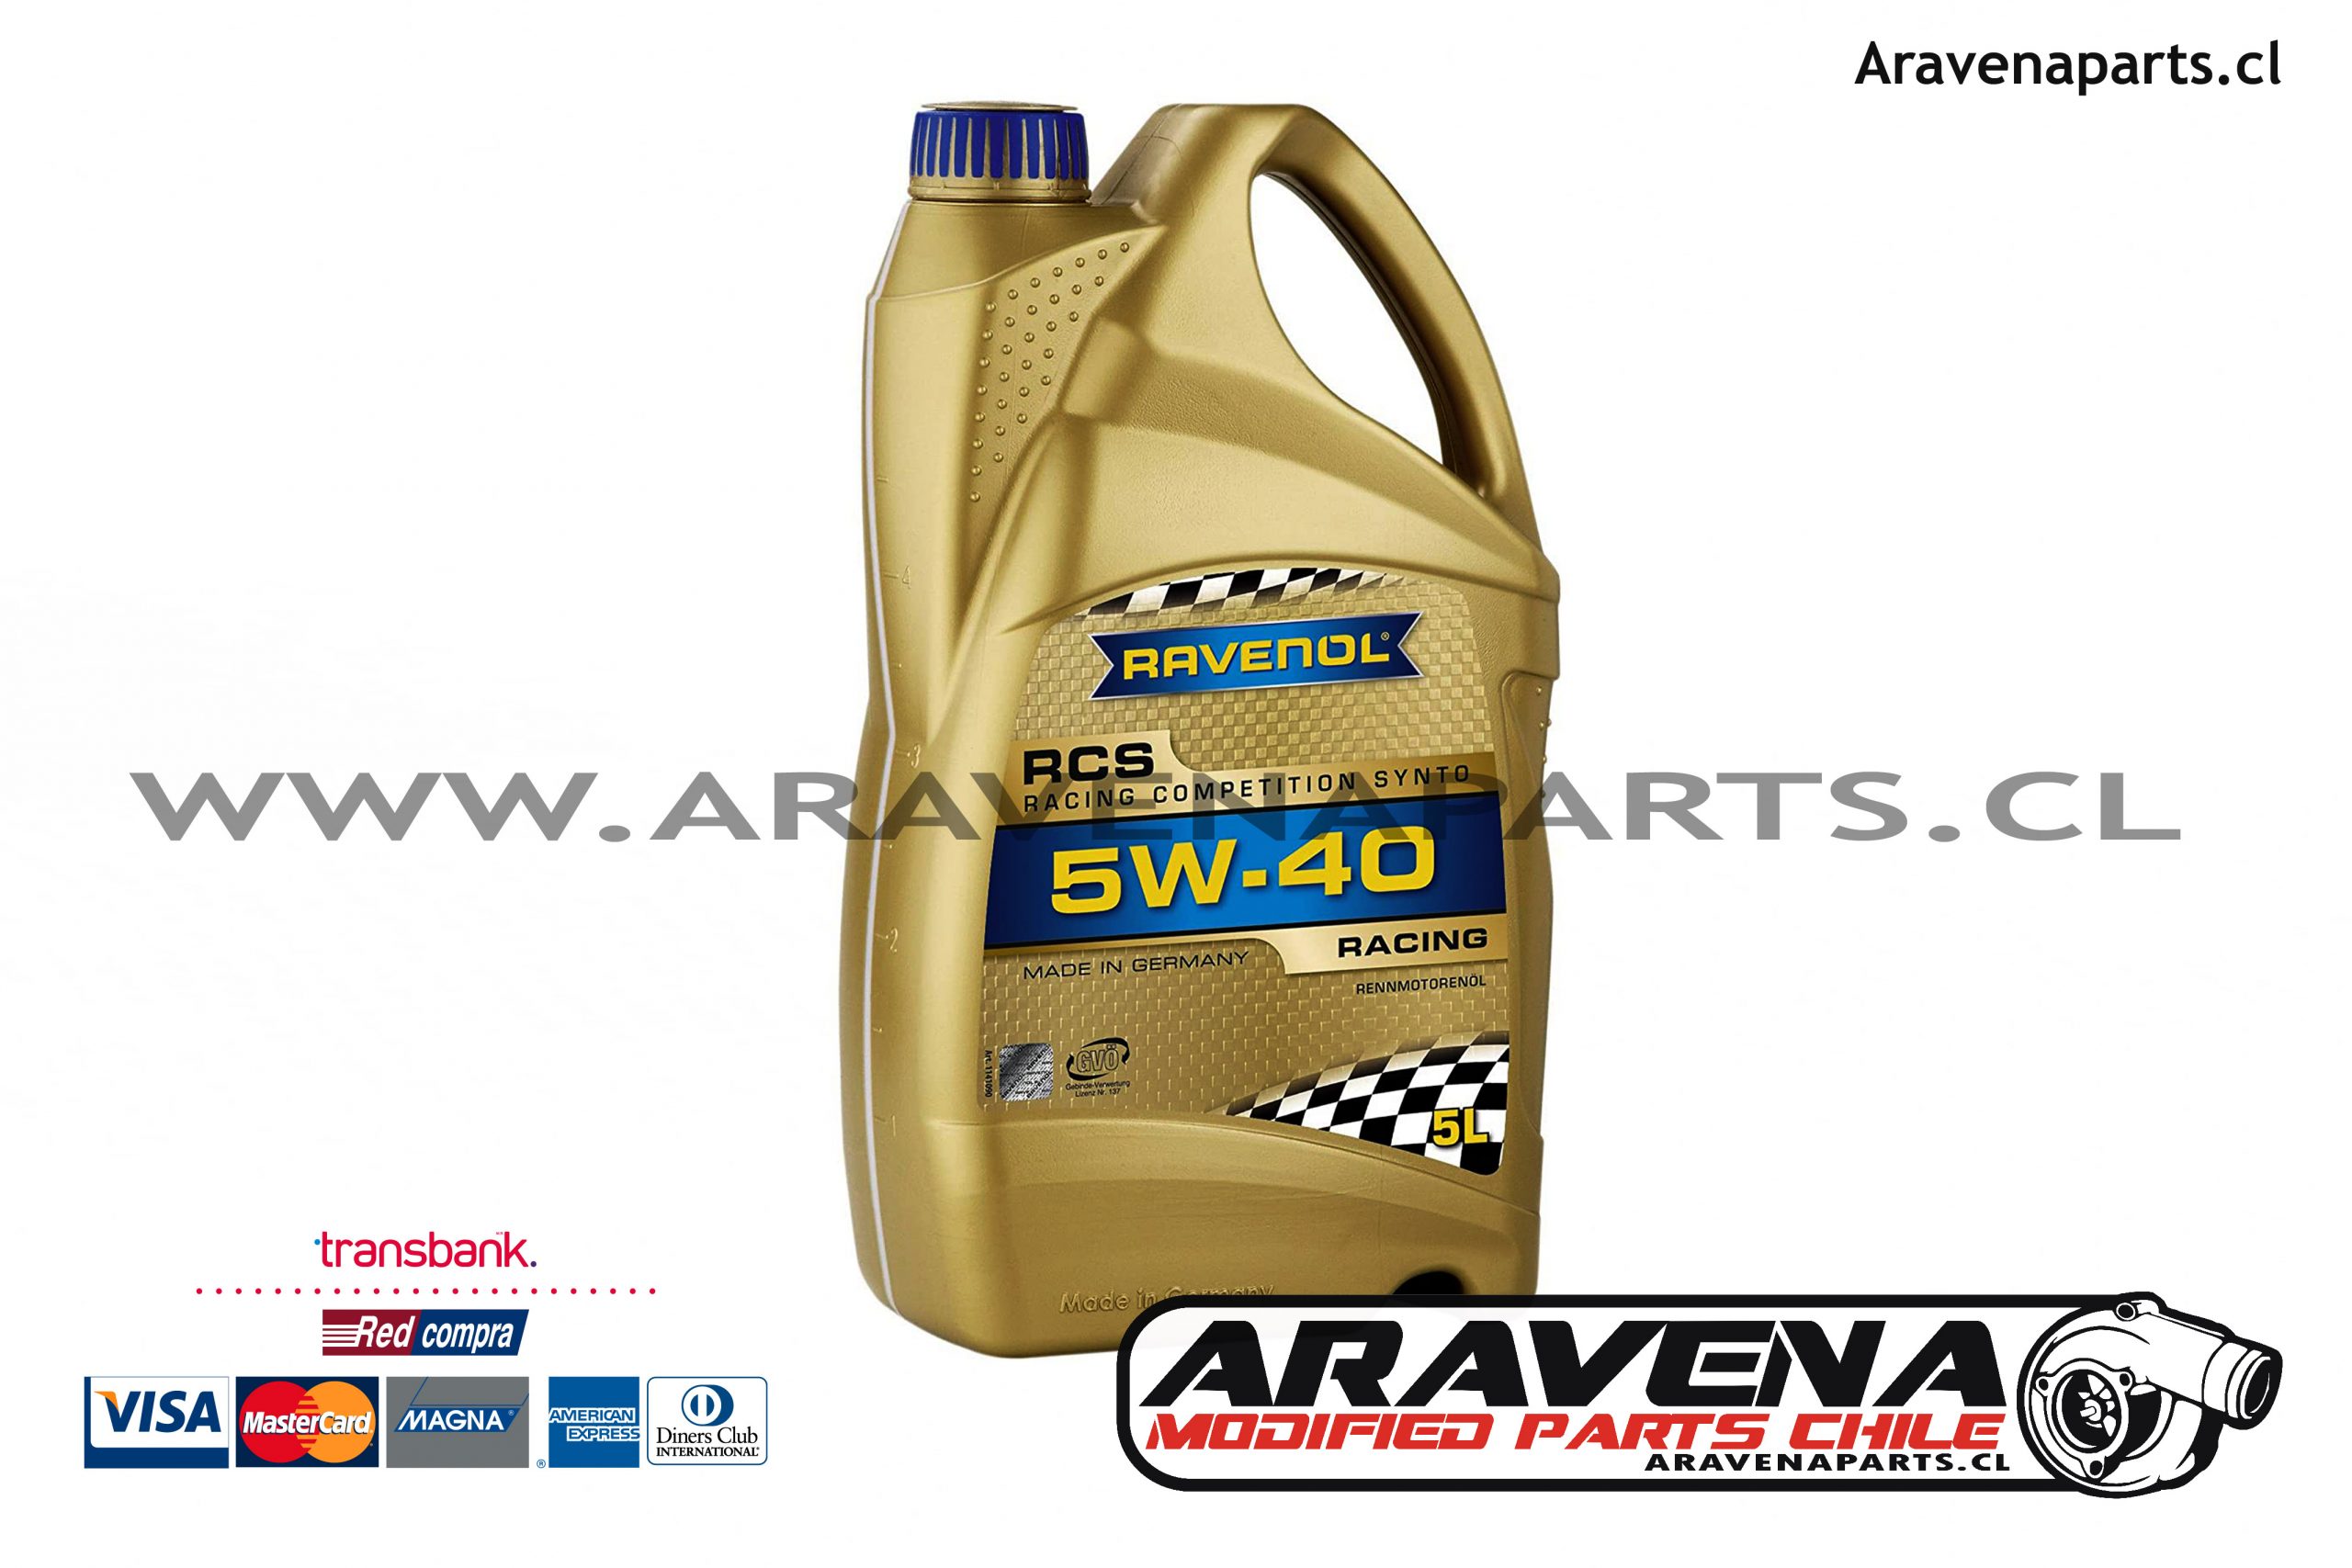 Ravenol 5W40 RCS 5LT RACING COMPETITION SYNTO OIL - Aravena Parts